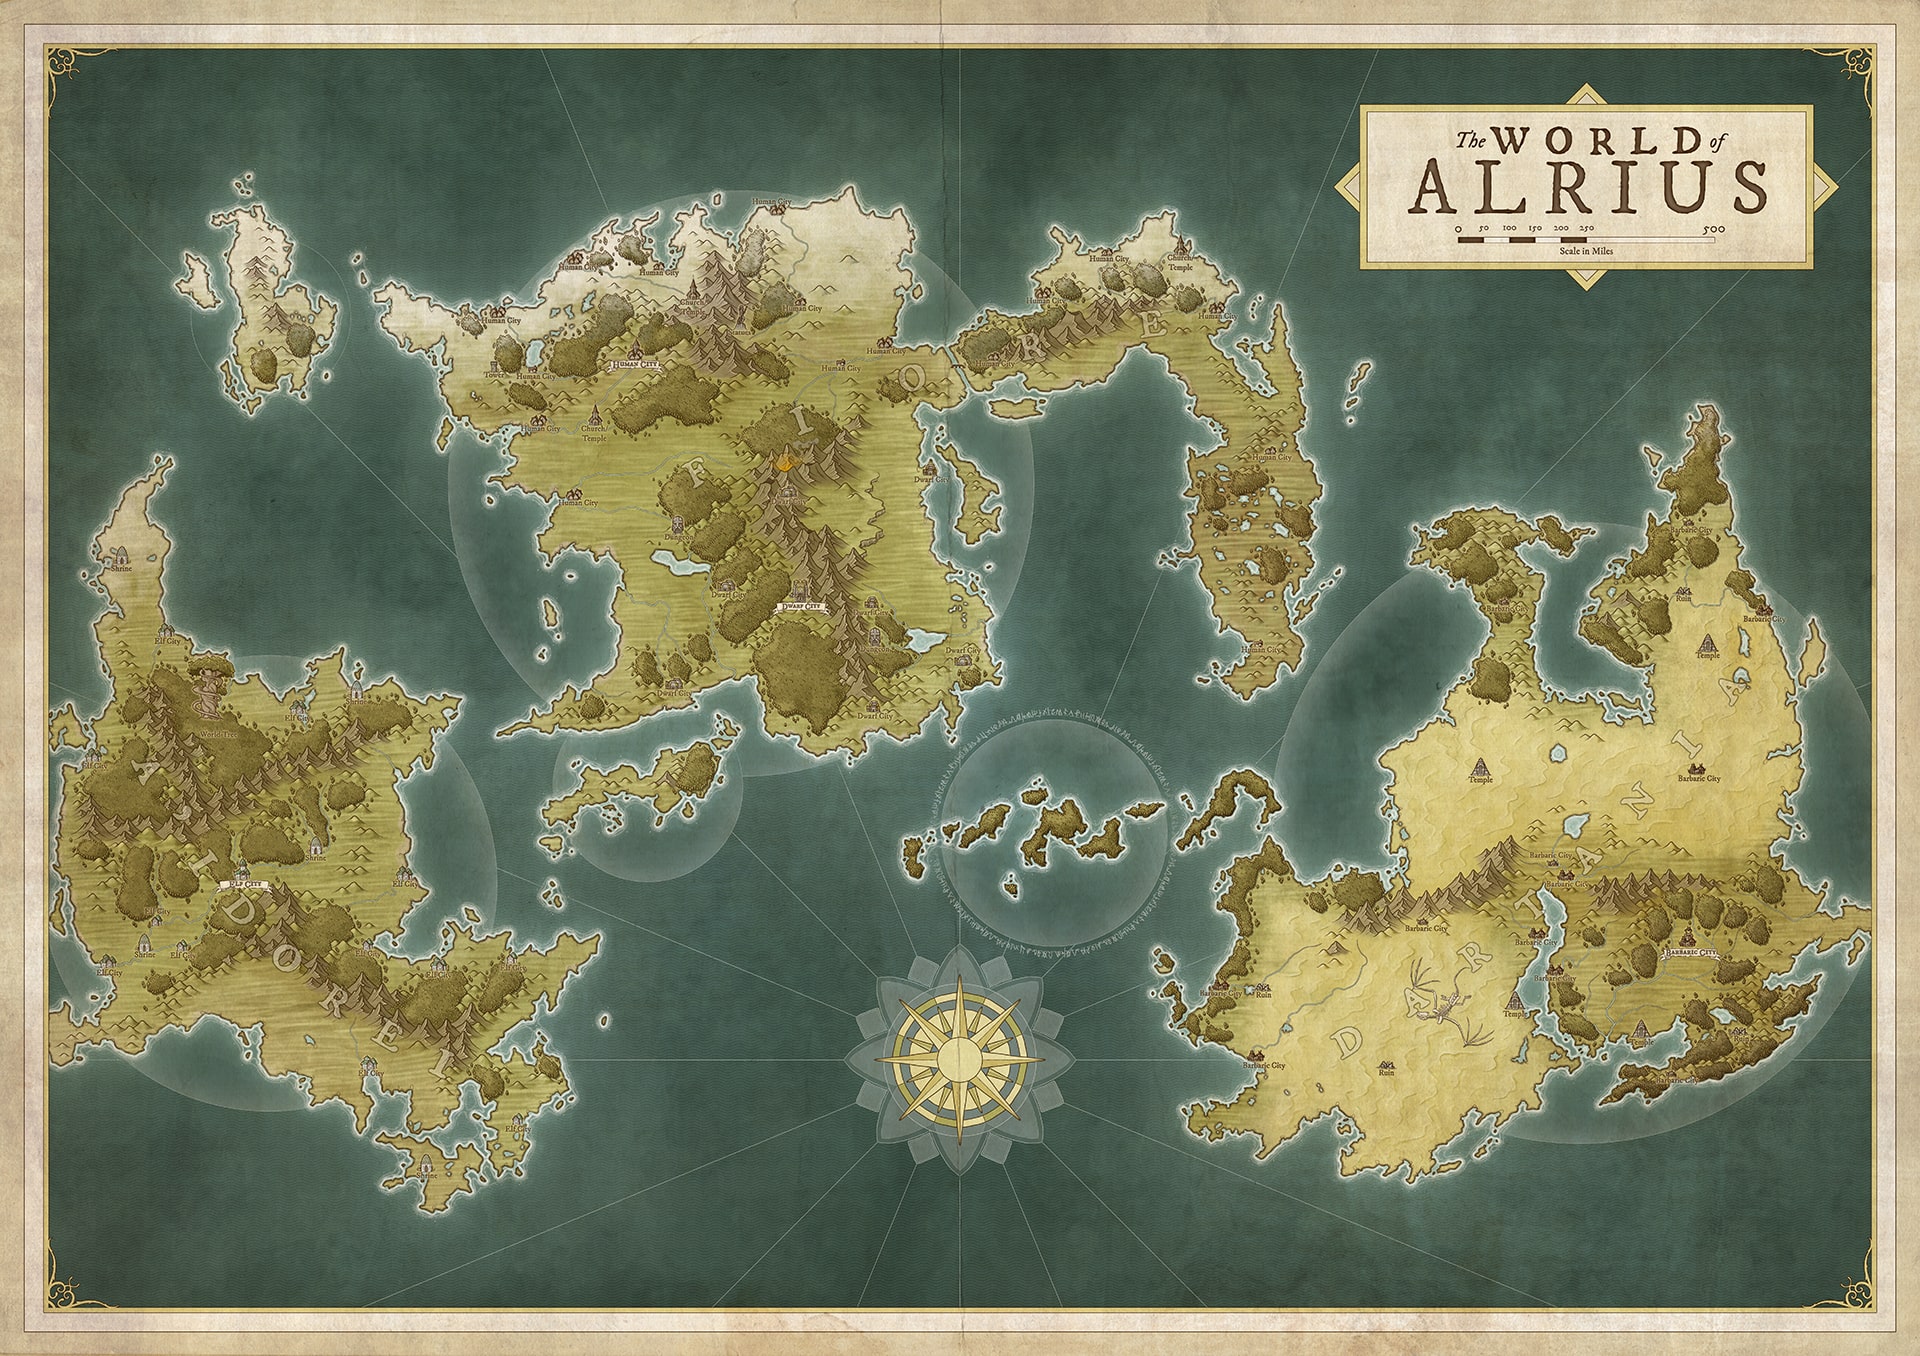 alrius fanyasy map with island